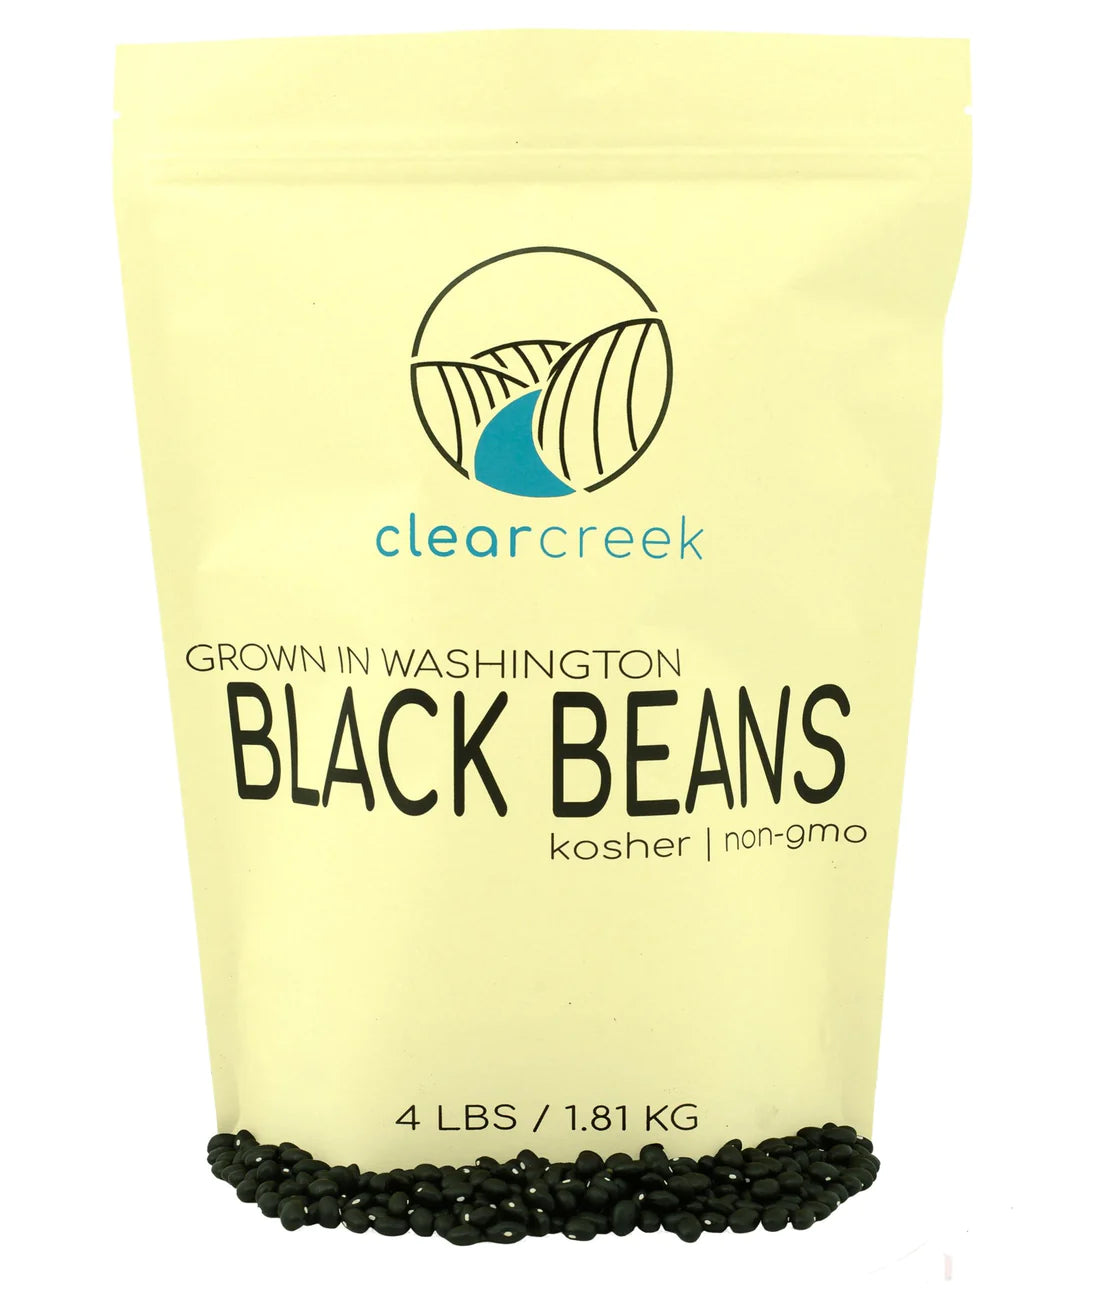 Dry Black Beans